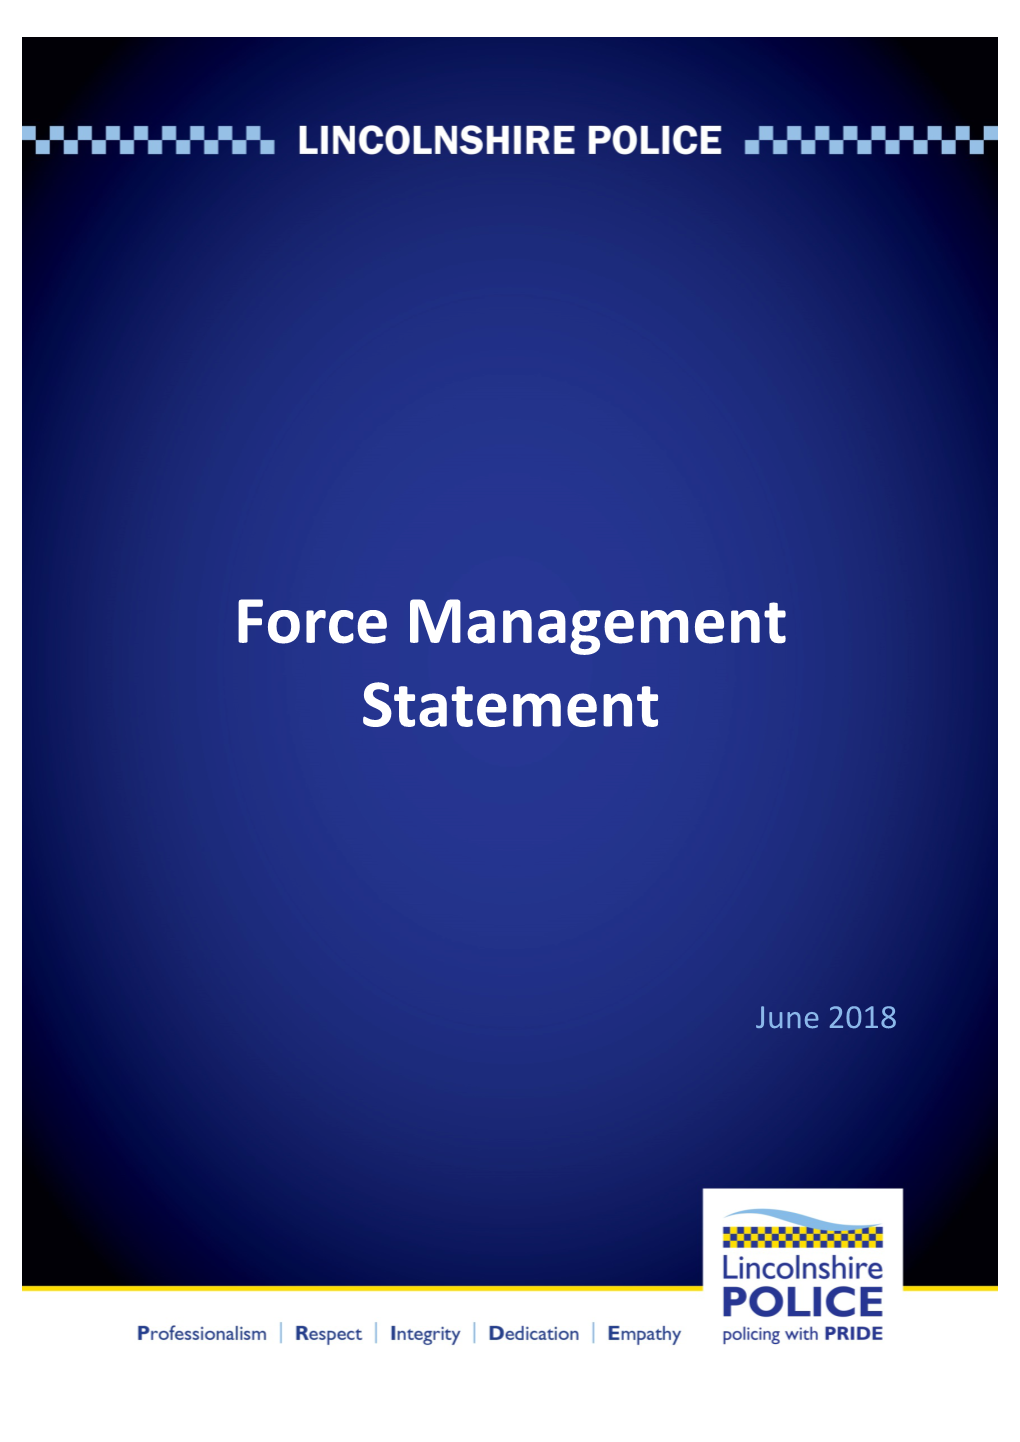 Force Management Statement